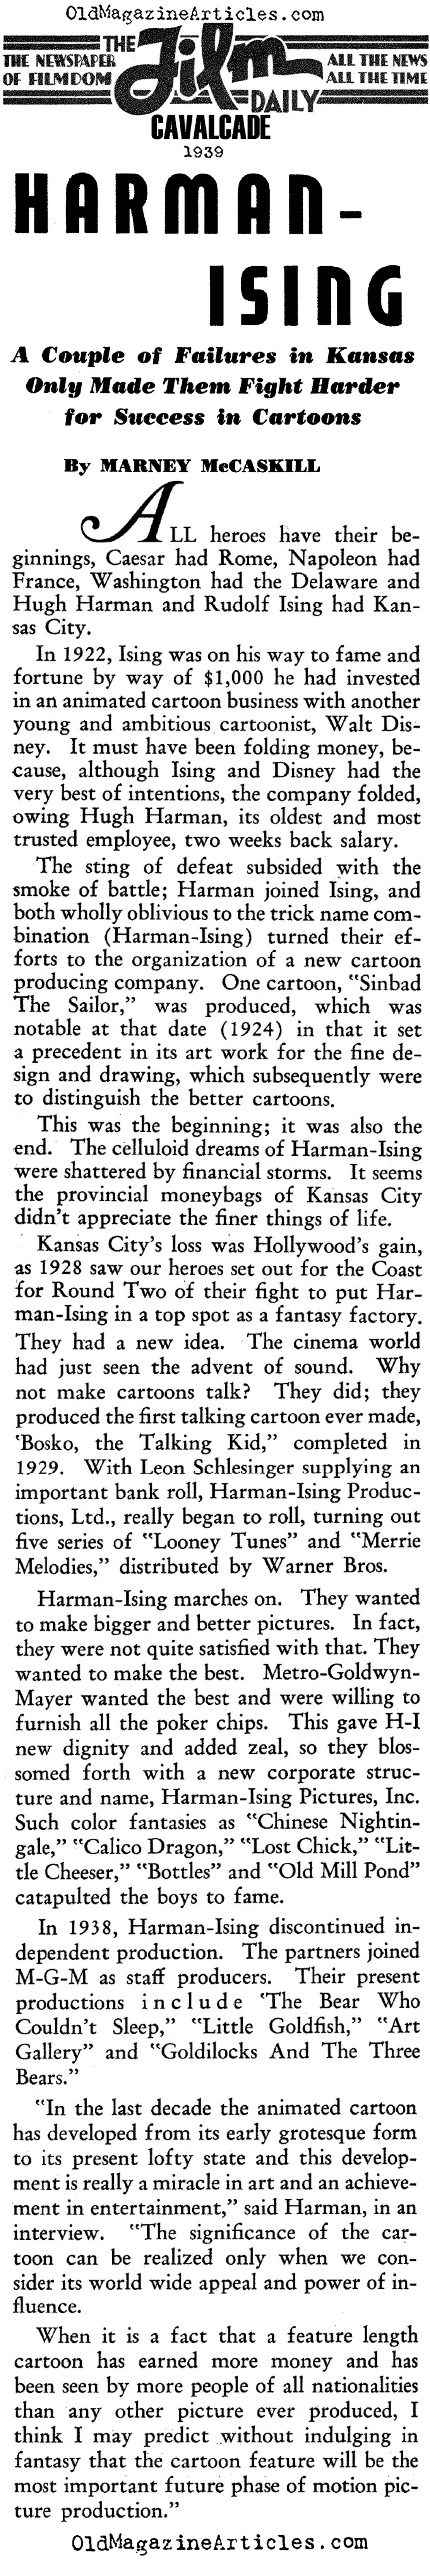 Hugh Harmon & Rudolf Ising: Animators (Film Daily, 1939)